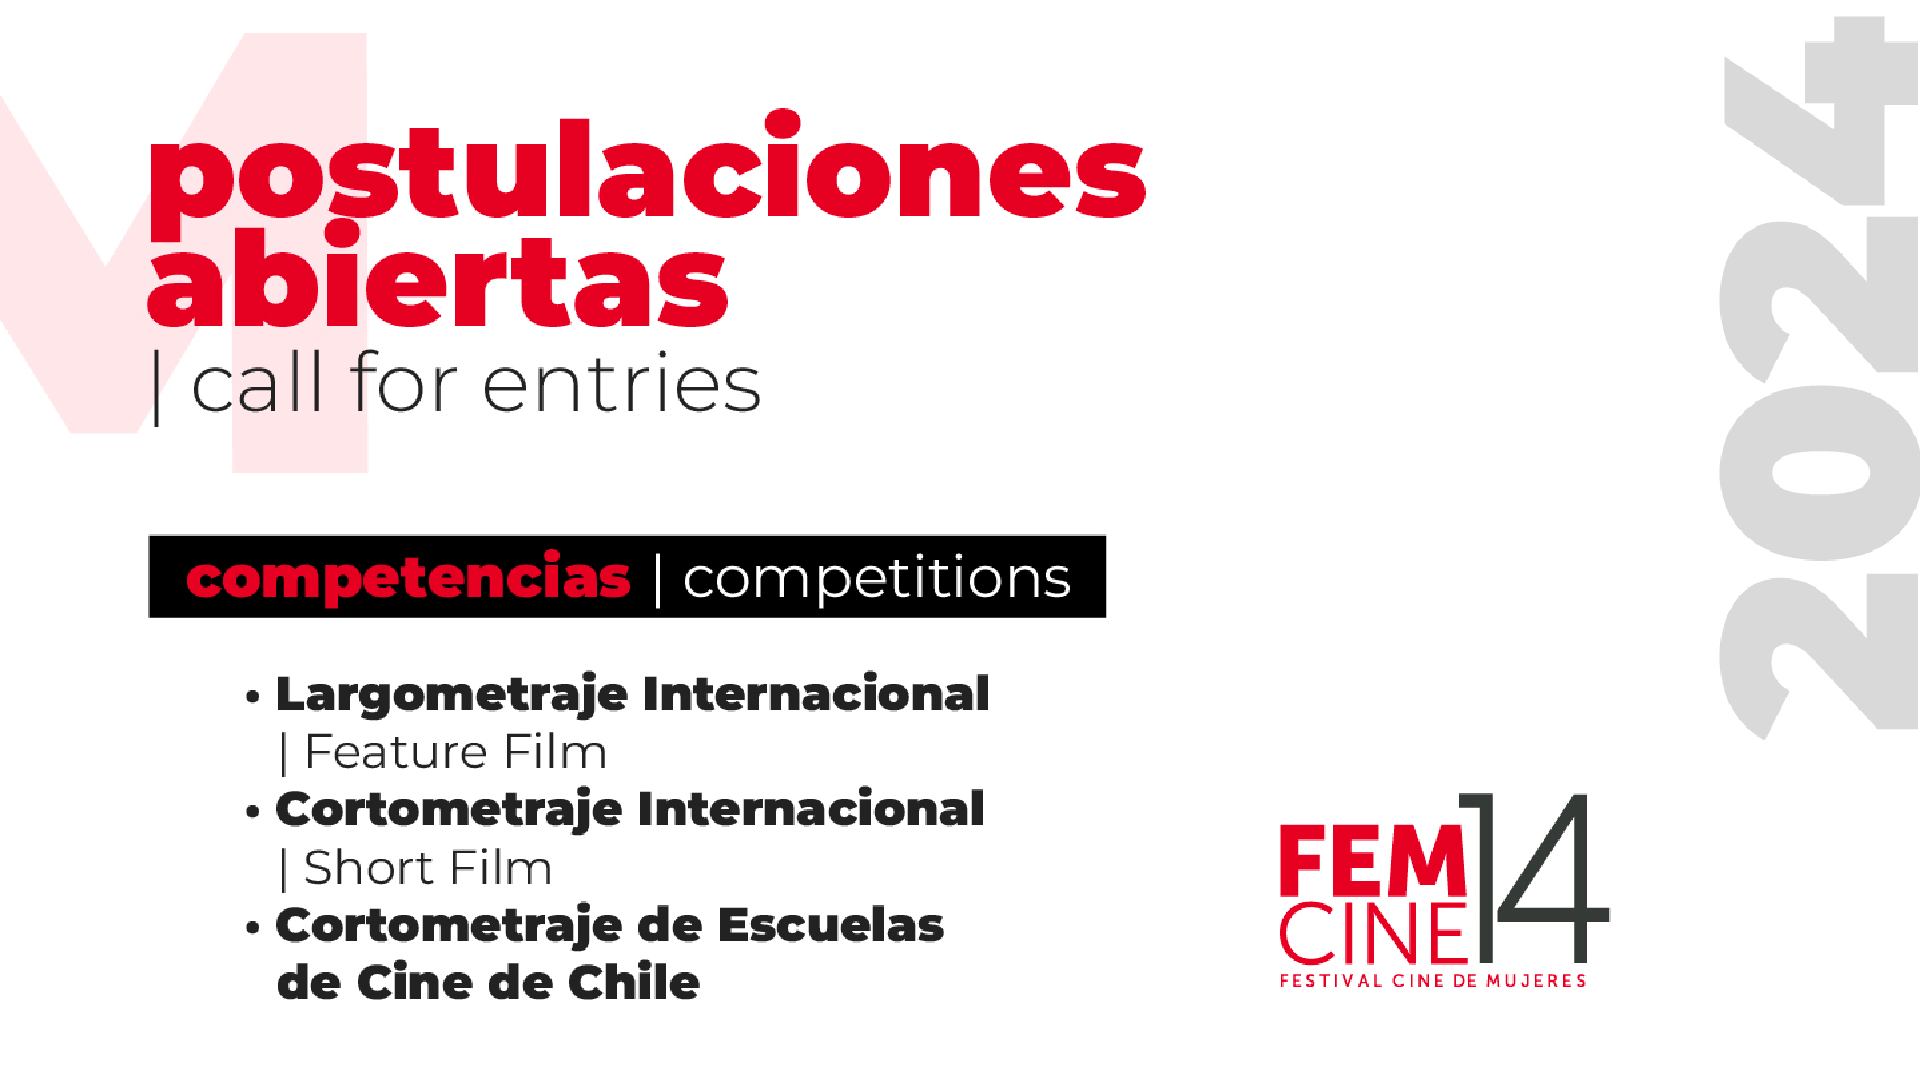 14º FEMCINE - Festival de Cine de Mujeres